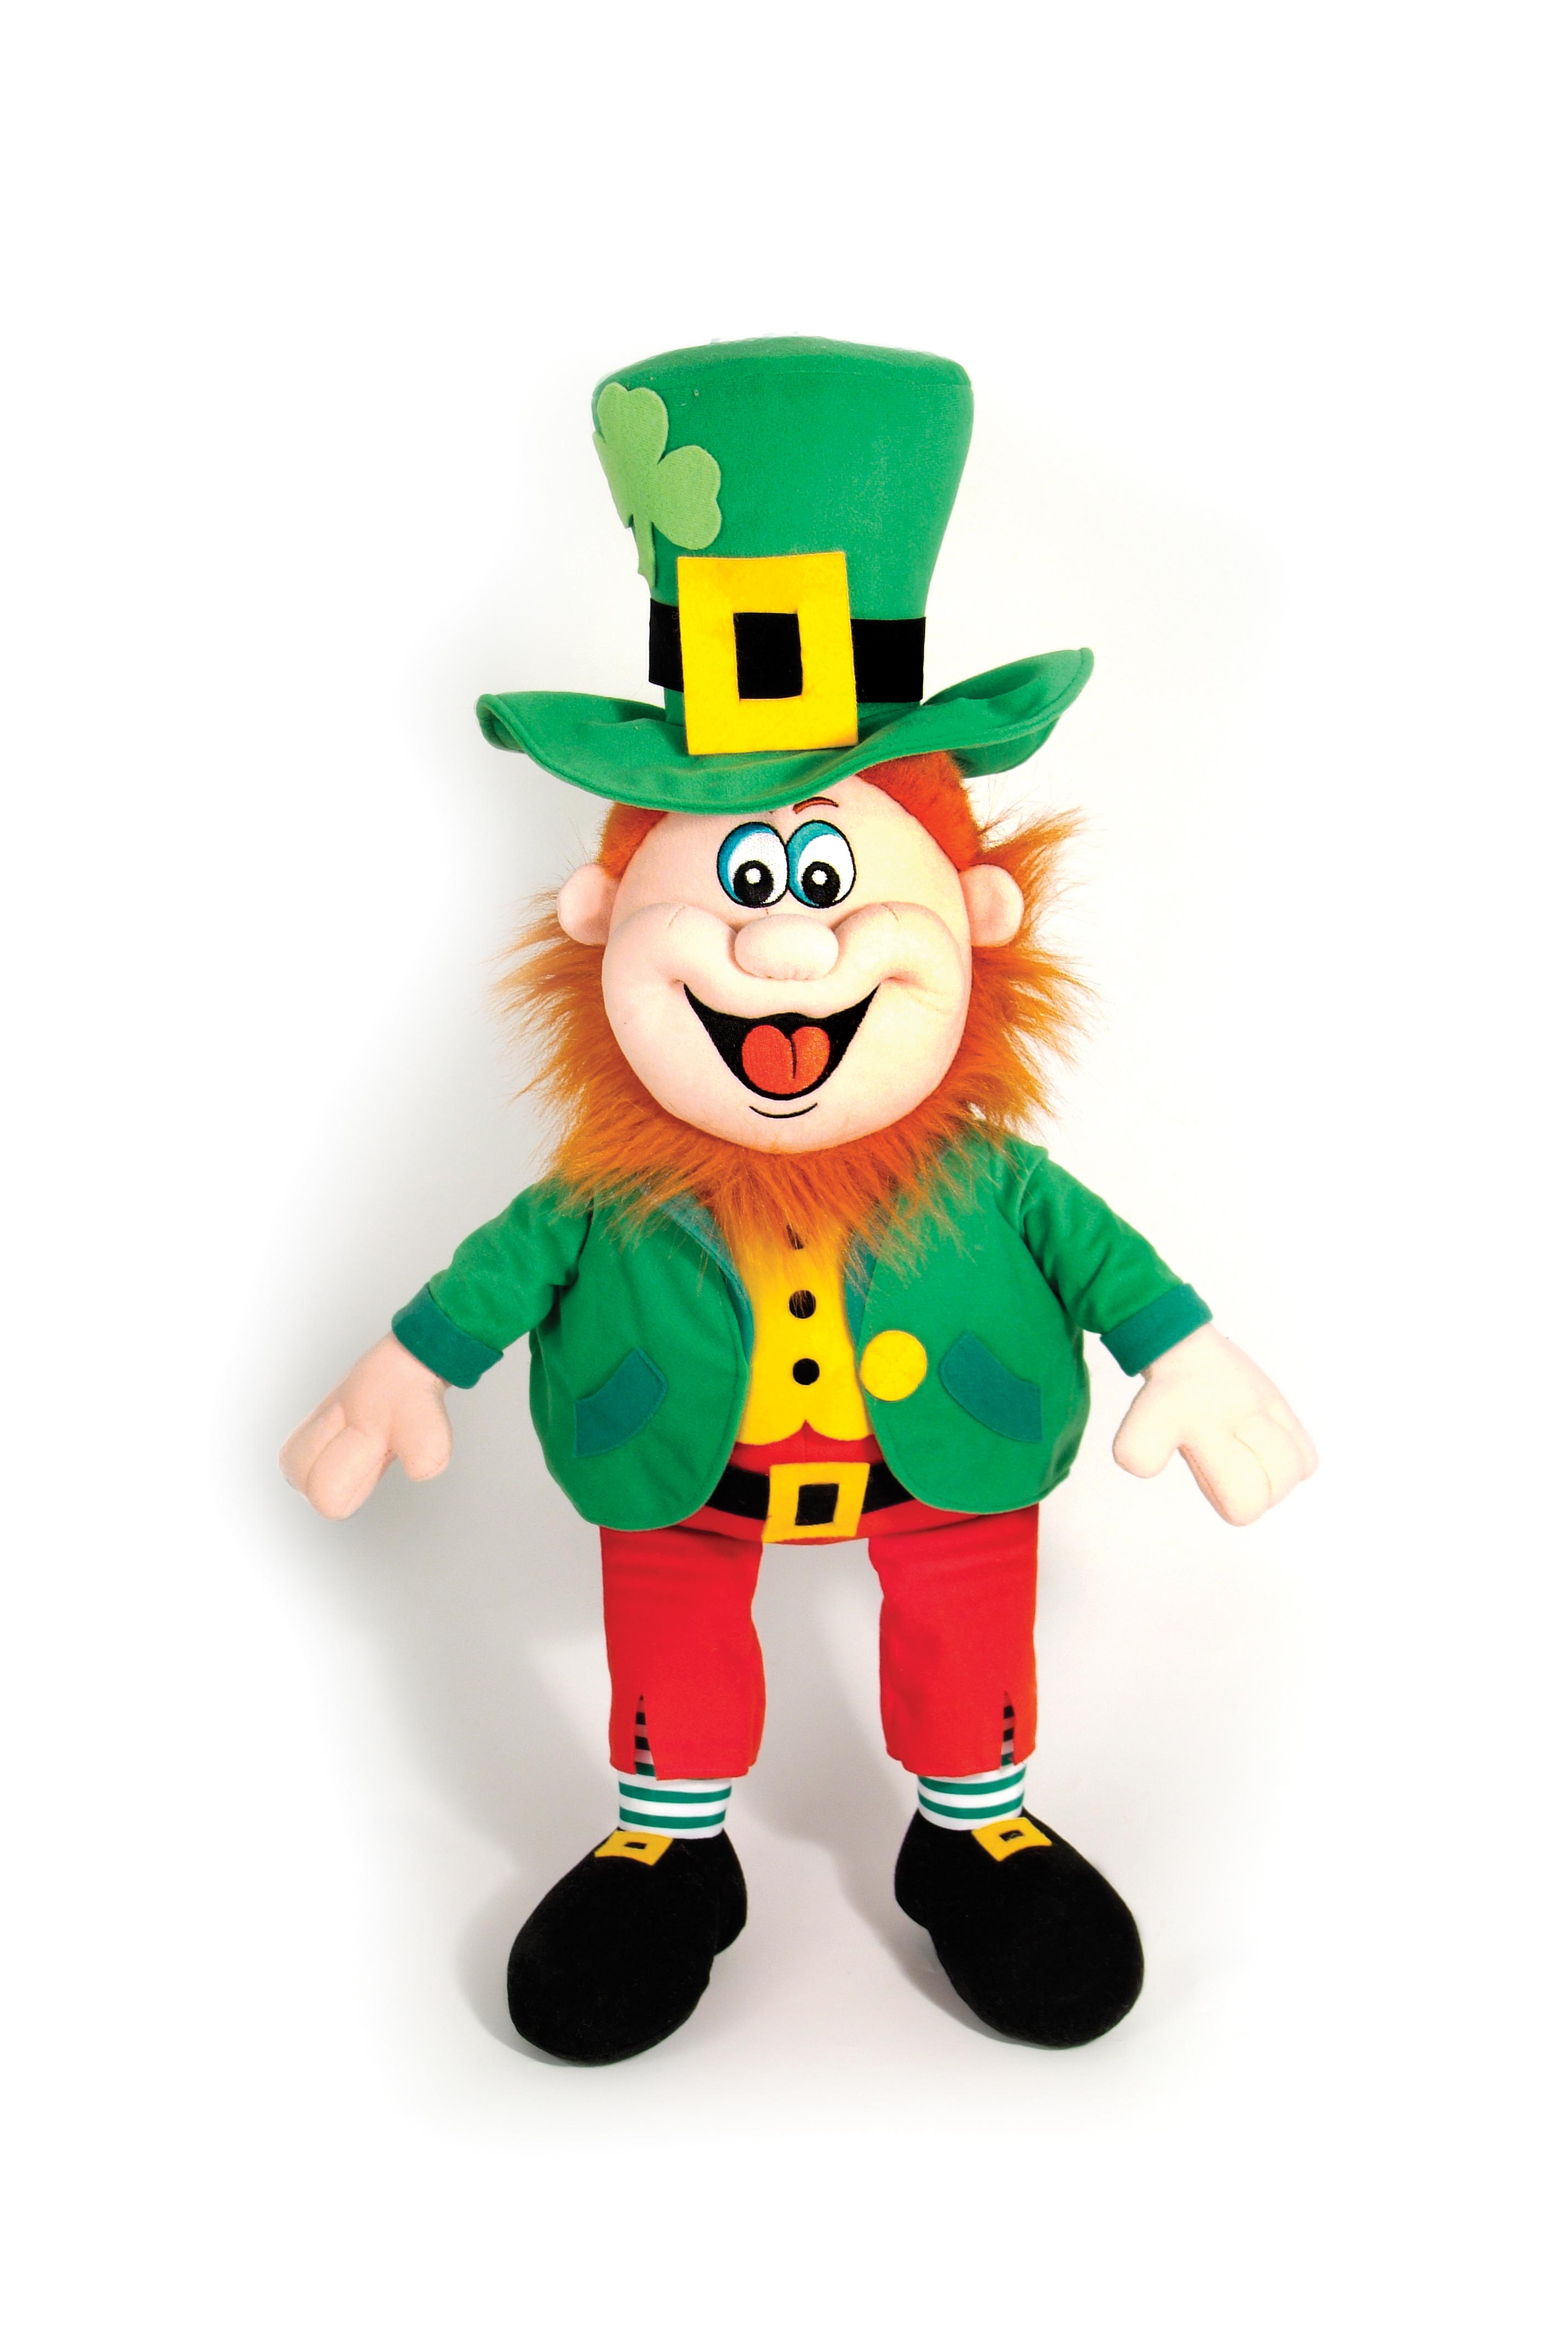 Free Pictures Of Irish Leprechauns, Download Free Pictures Of Irish